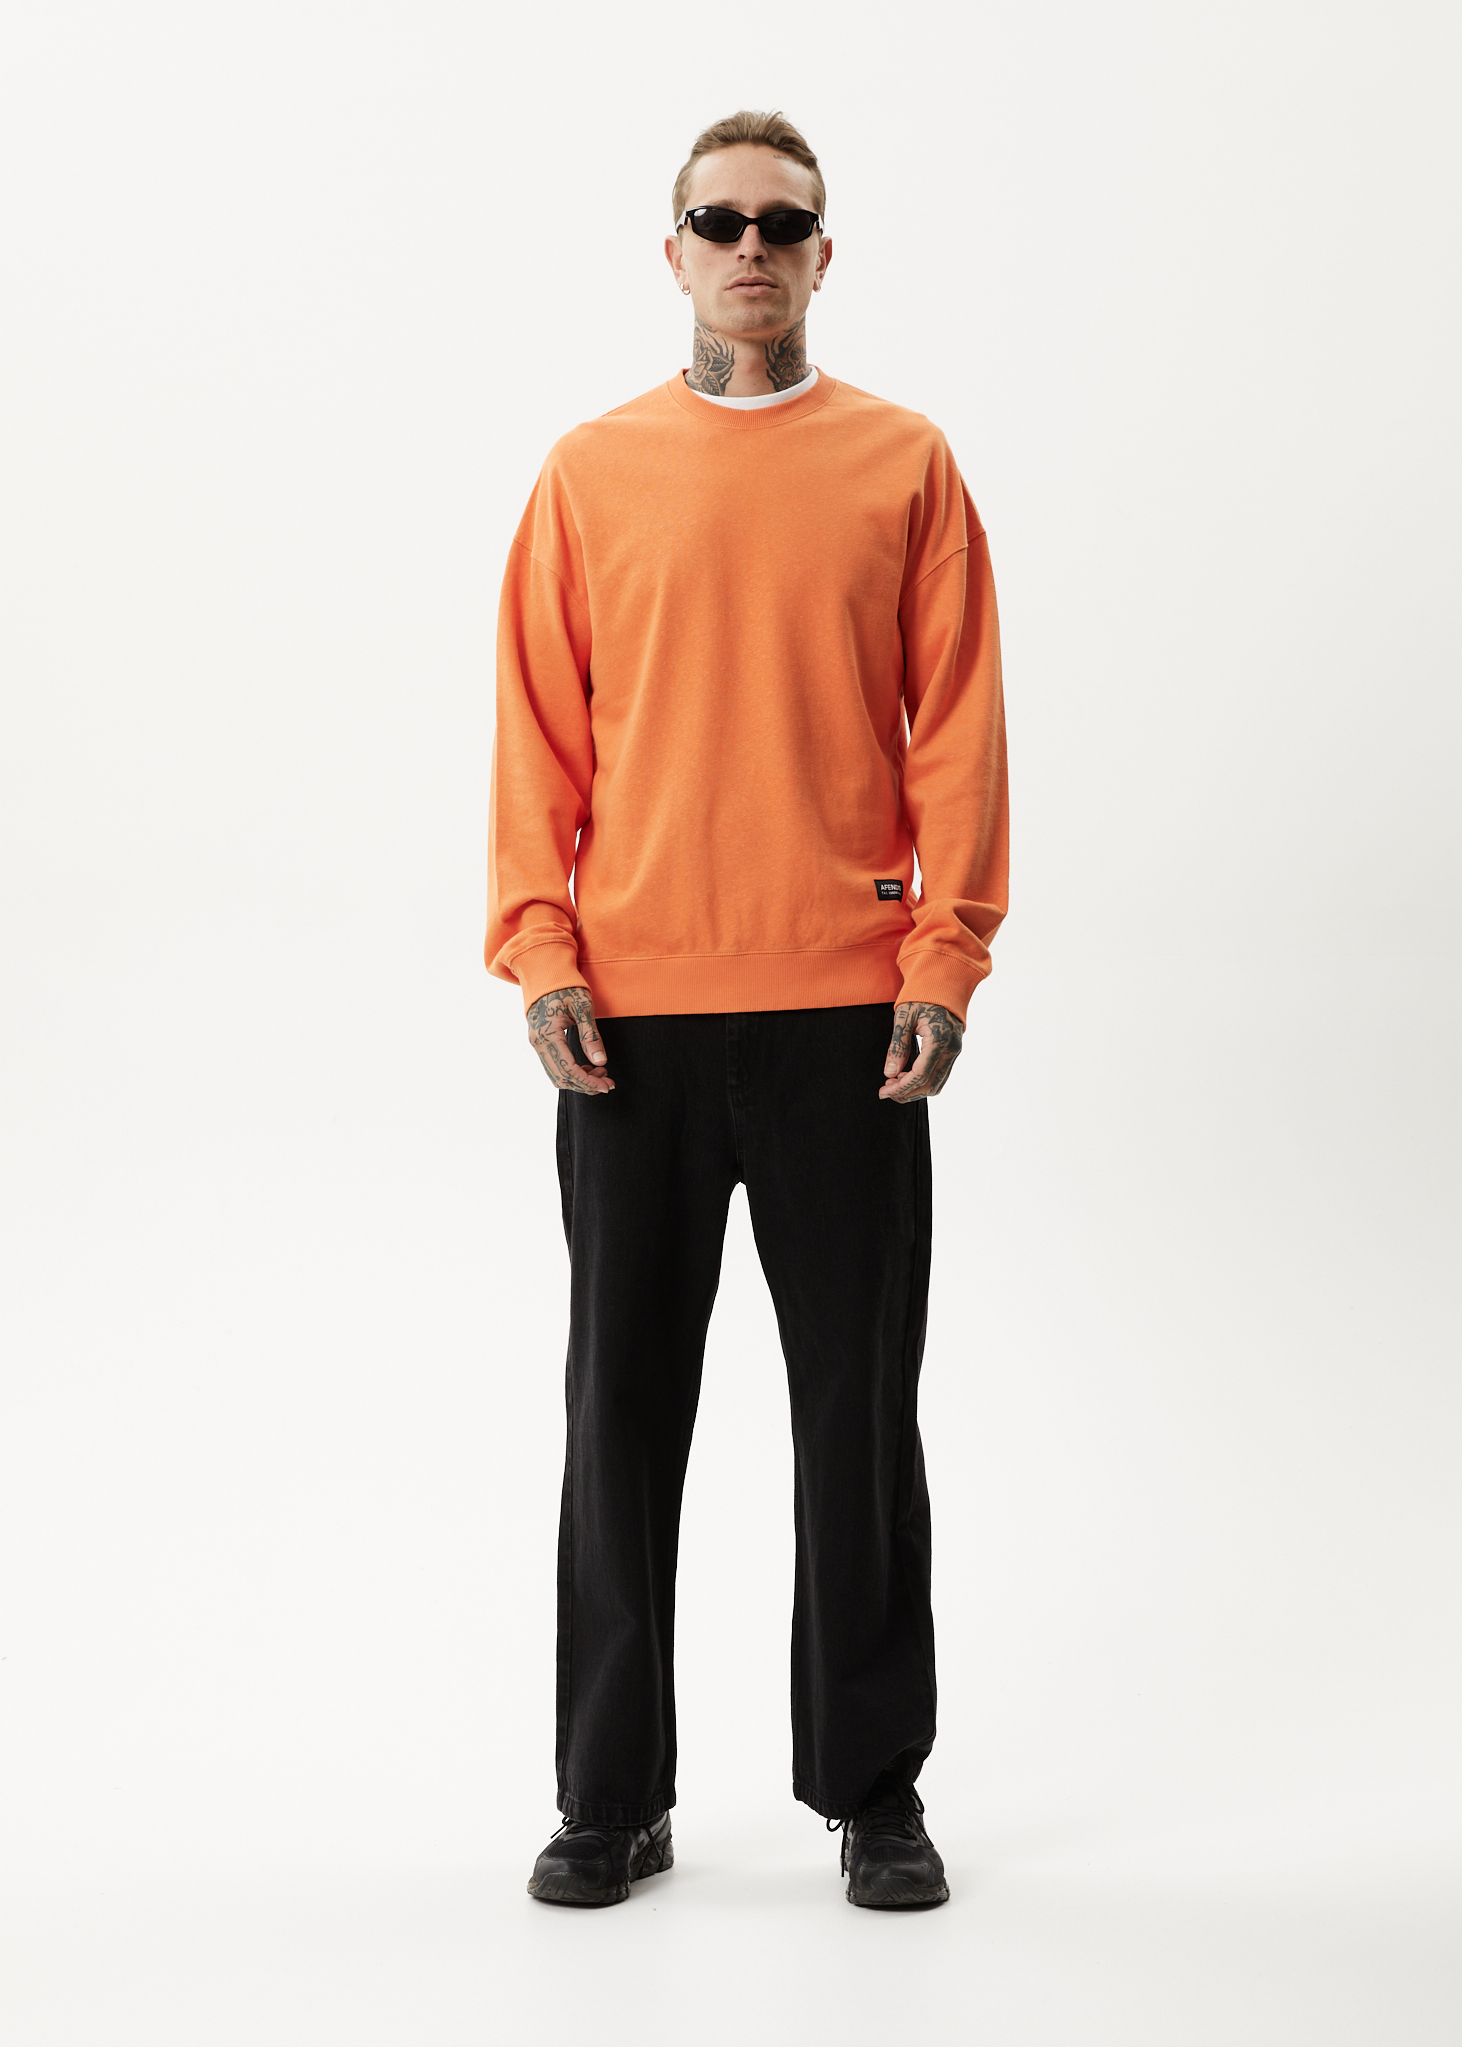 Oversized Men's Sleeveless Pullover Sweatshirt / Crew Neck